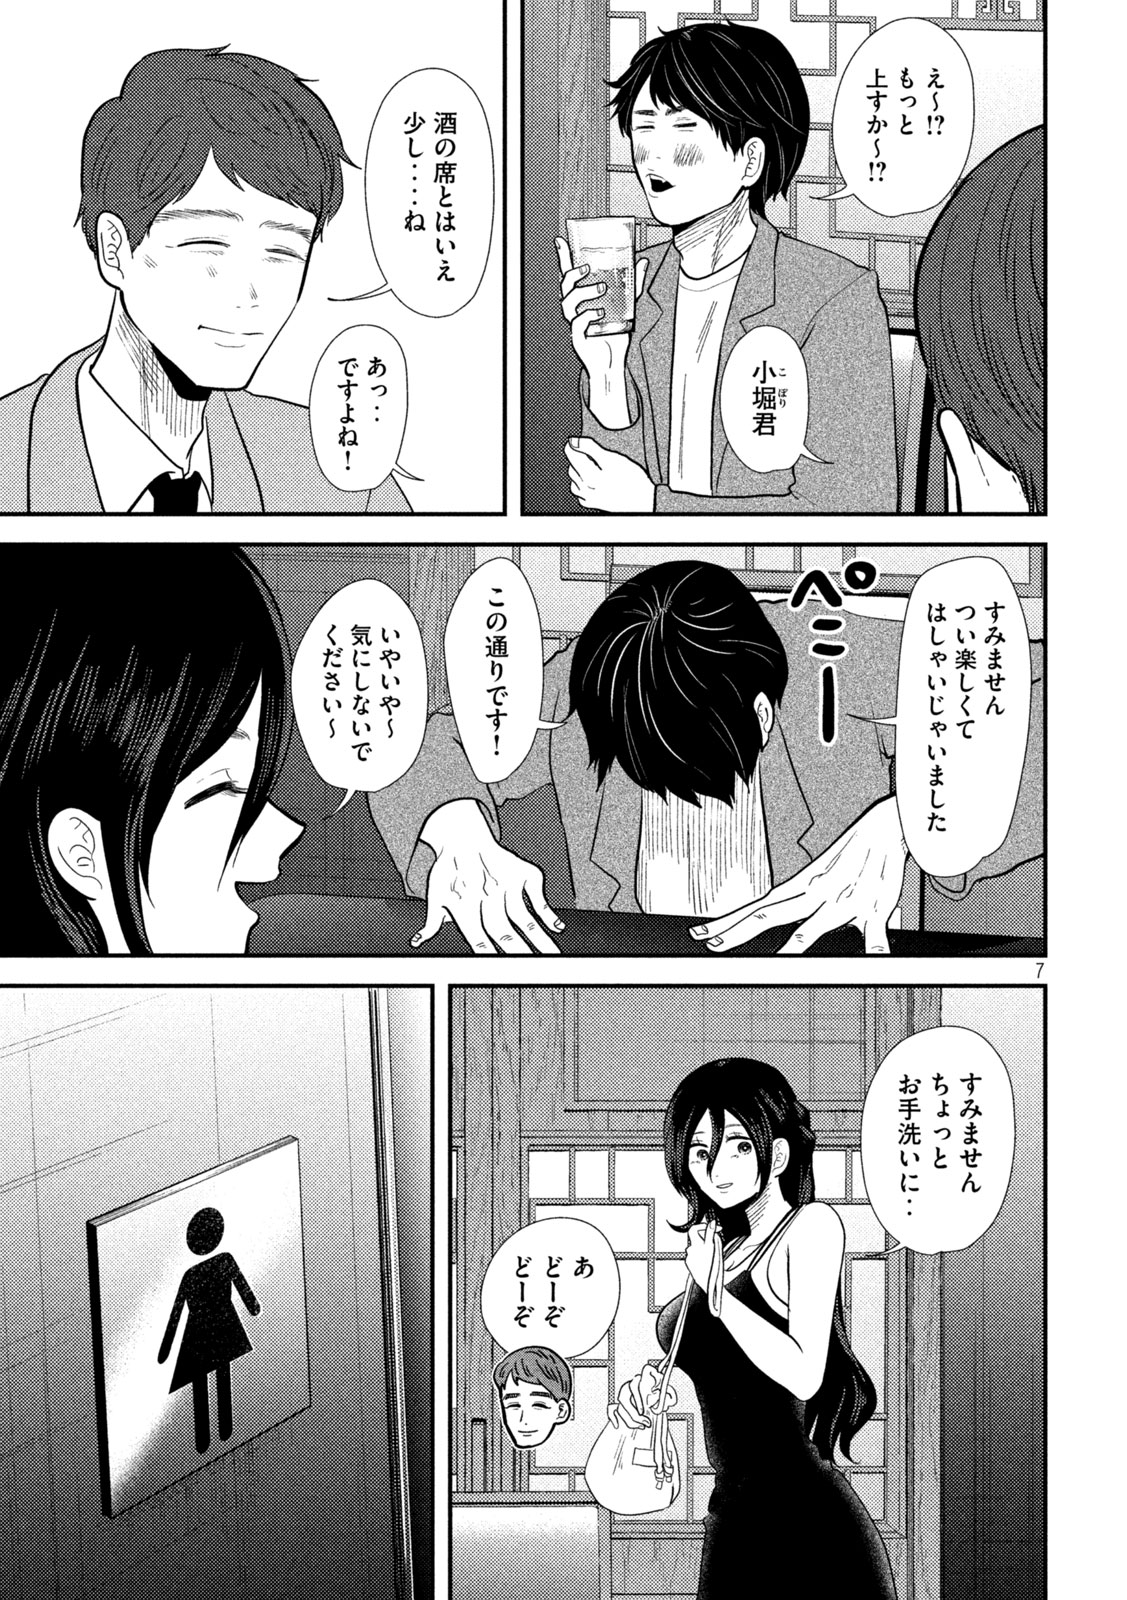 Heisei Haizanhei Sumire-chan - Chapter 23 - Page 7